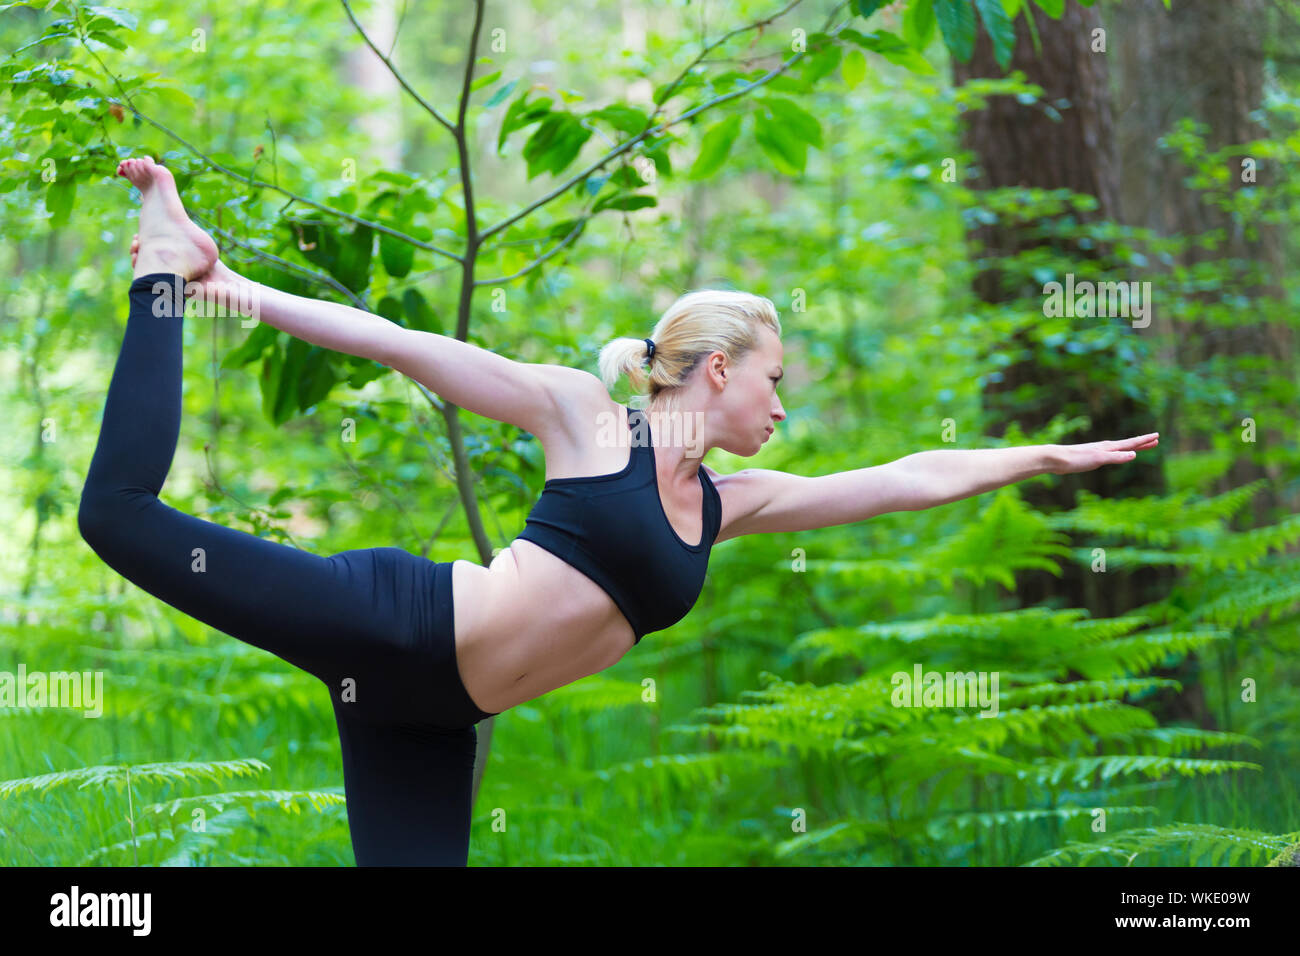 Yoga Questions Answered | Eagle pose yoga, Bikram yoga, Yoga asanas